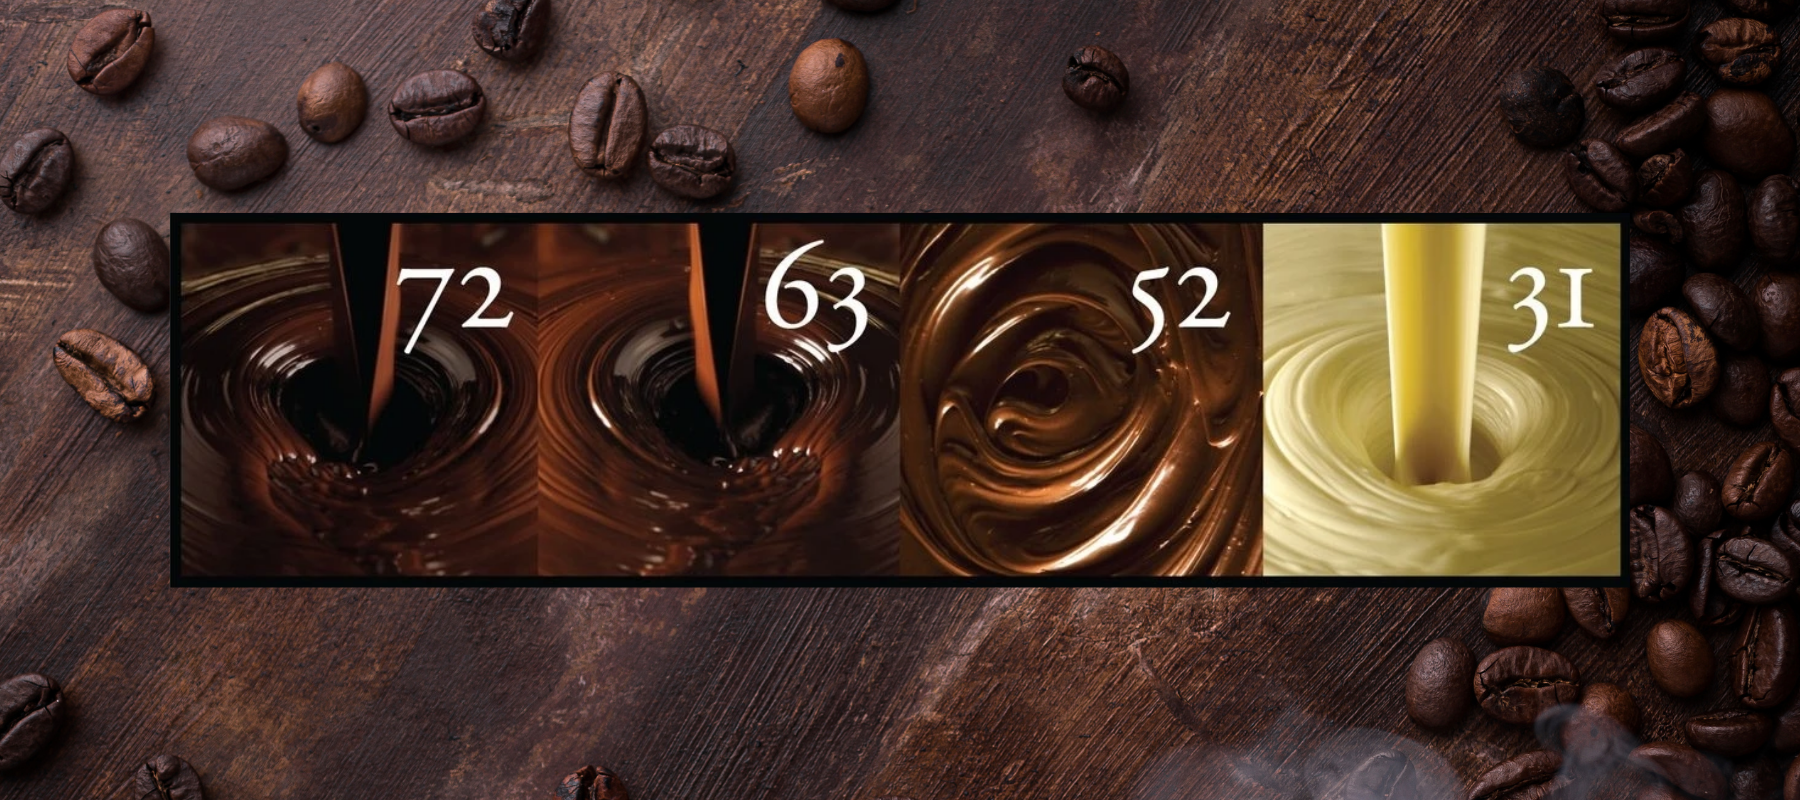 Dilettante Chocolates Chocolate Scale Blog Banner Featuring Extra-Dark, Dark, Ephemere, and White Chocolate